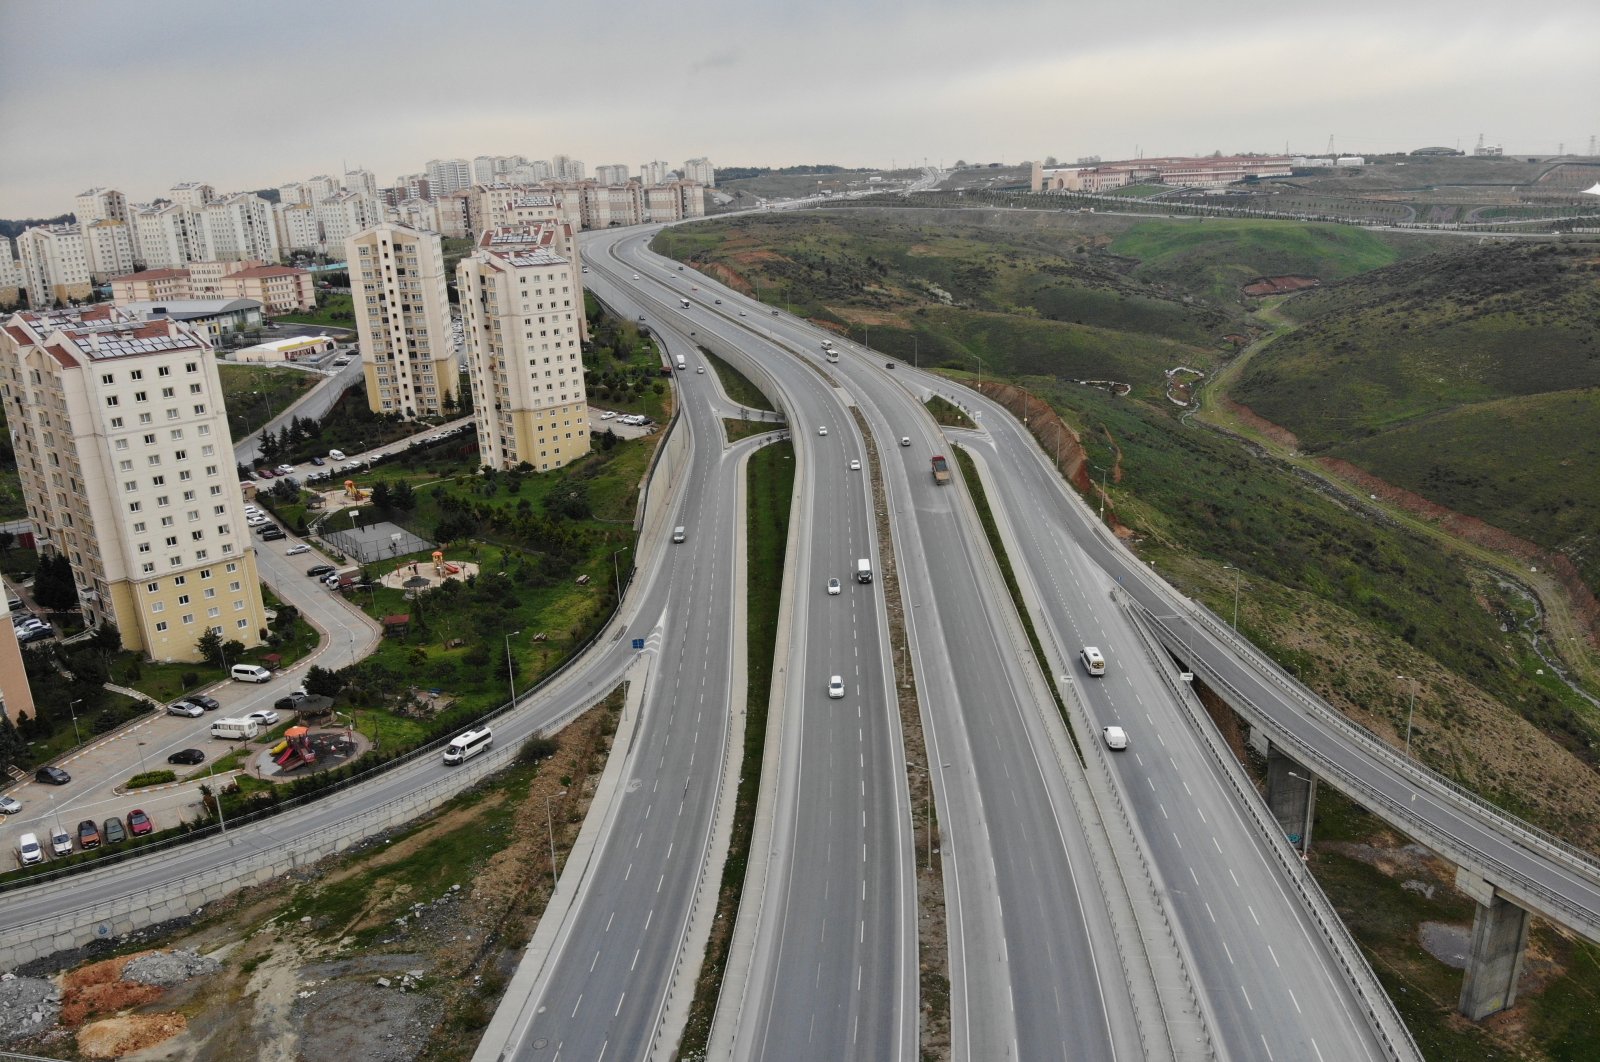 Turki berencana untuk meningkatkan batas kecepatan jalan raya